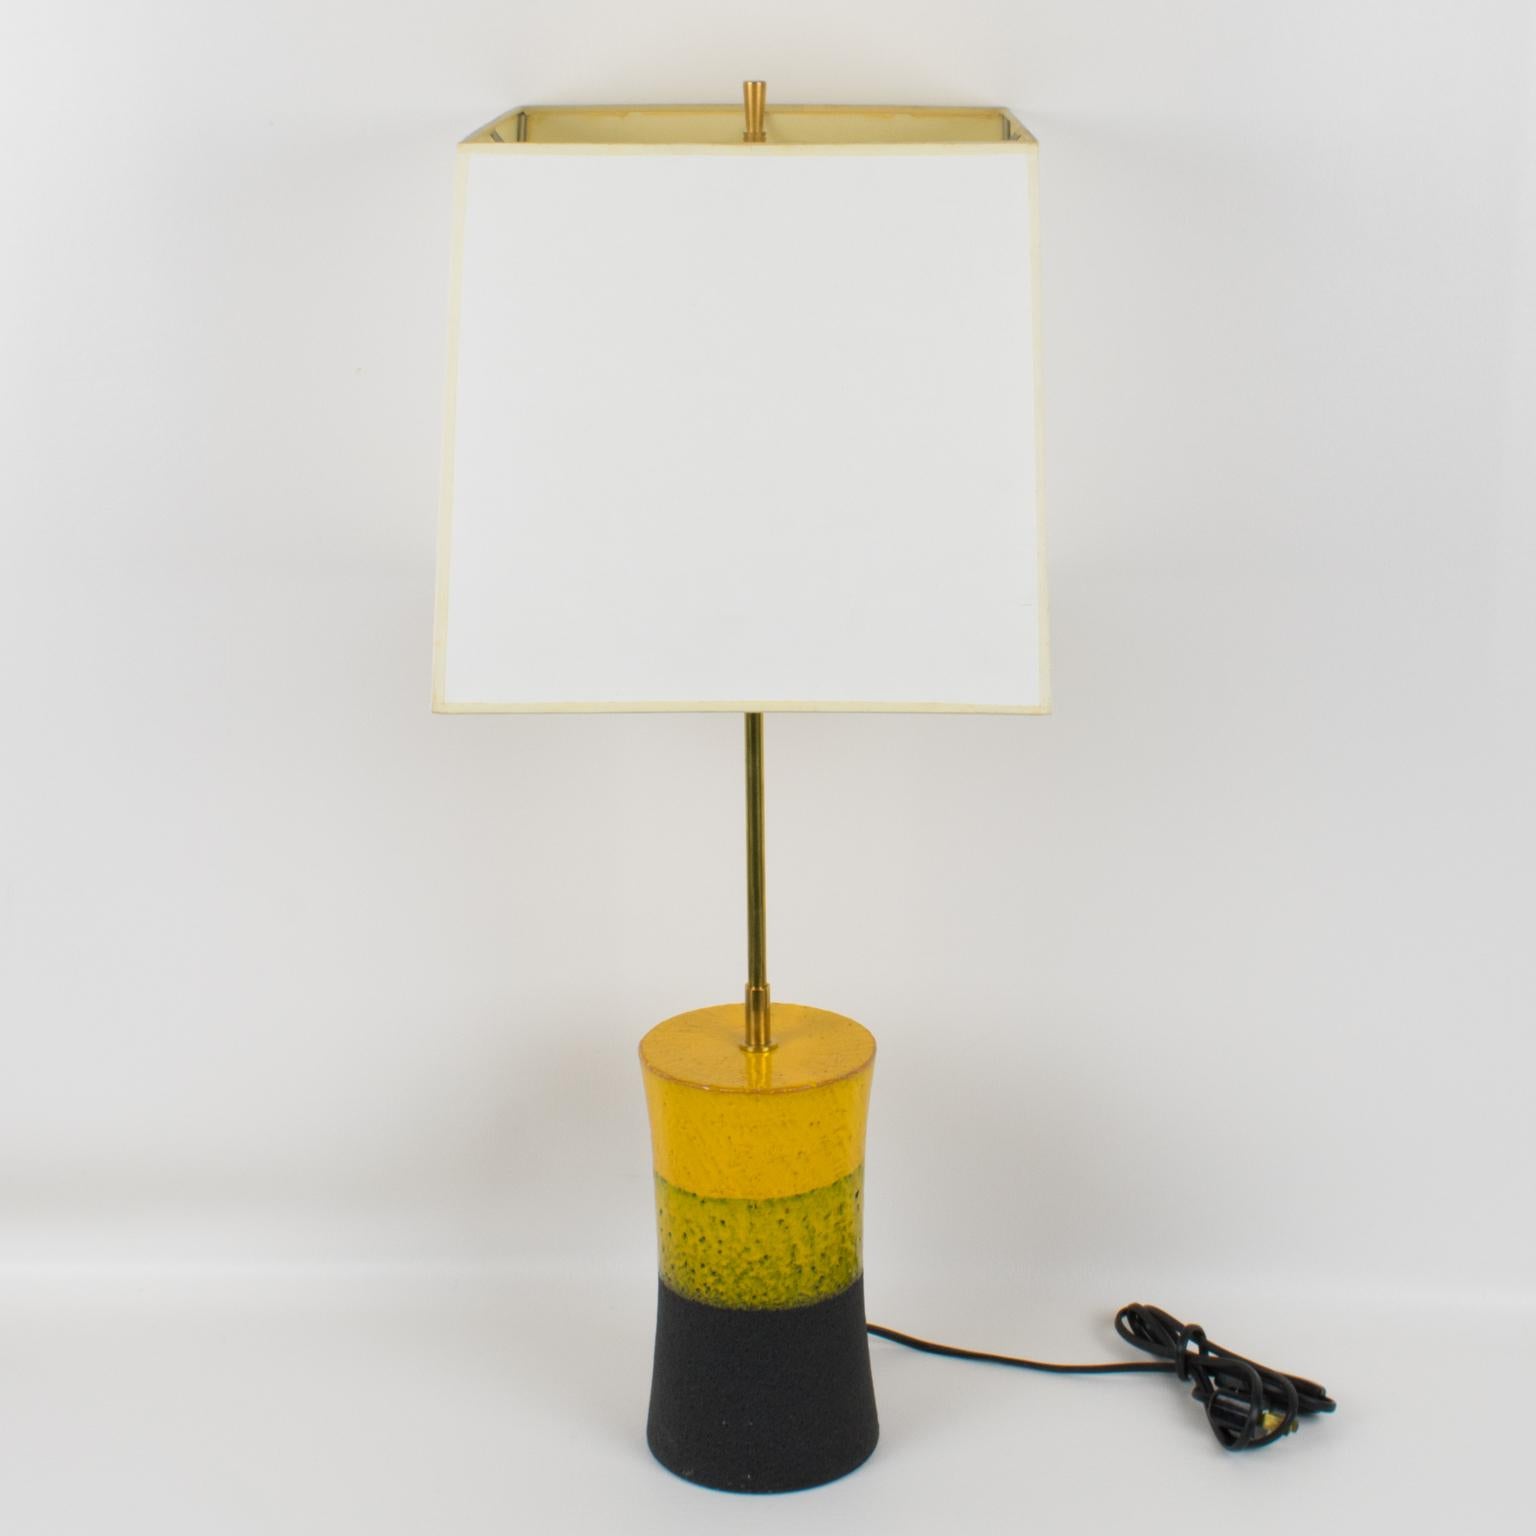 Aldo Londi for Bitossi Italy Mondrian Design Ceramic Table Lamp, 1960s For Sale 3